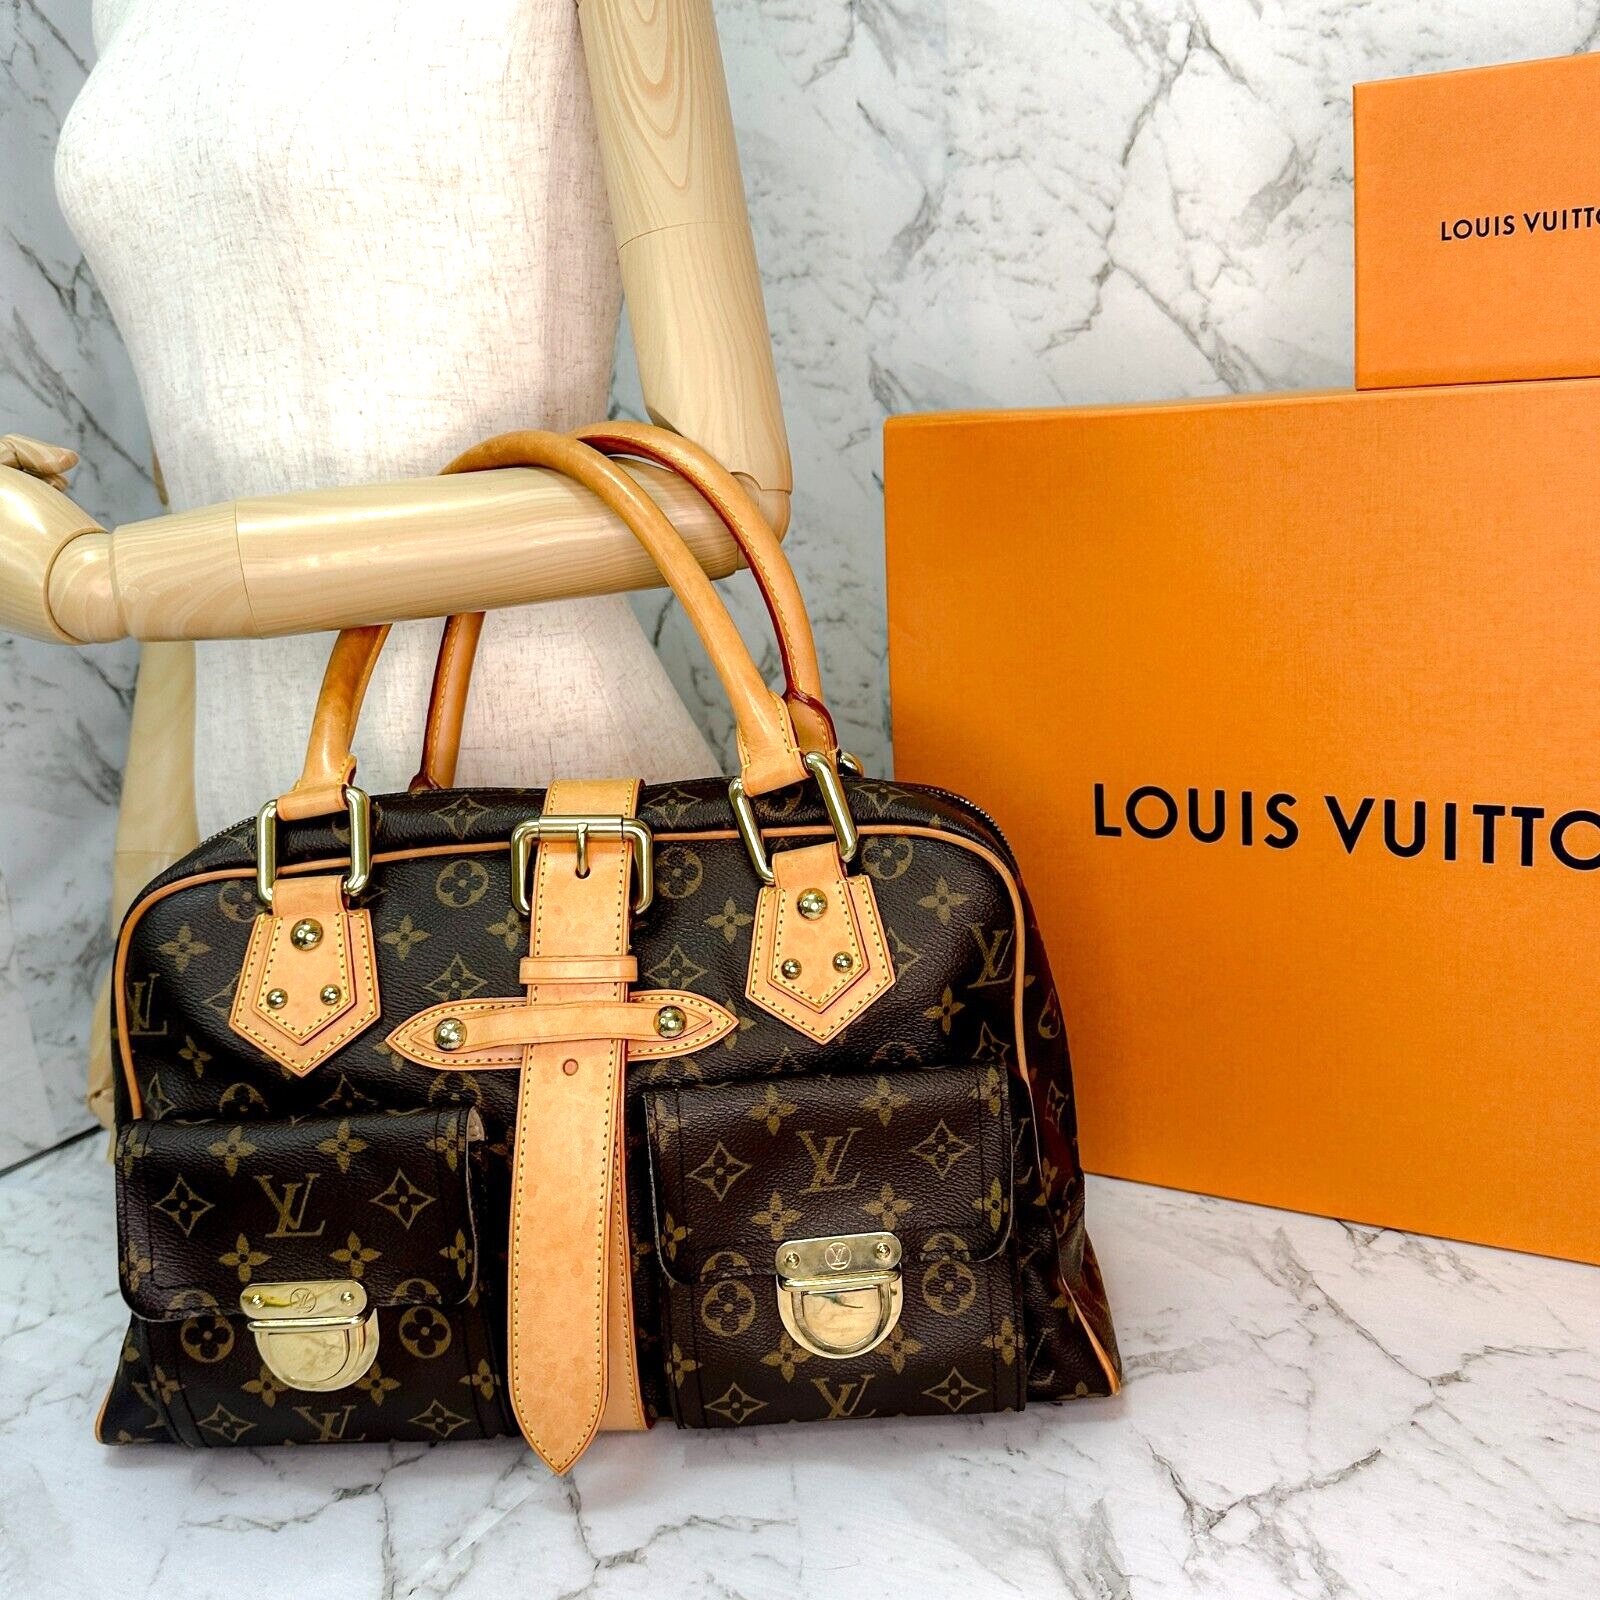 Sold at Auction: A Louis Vuitton Manhattan GM monogram canvas and